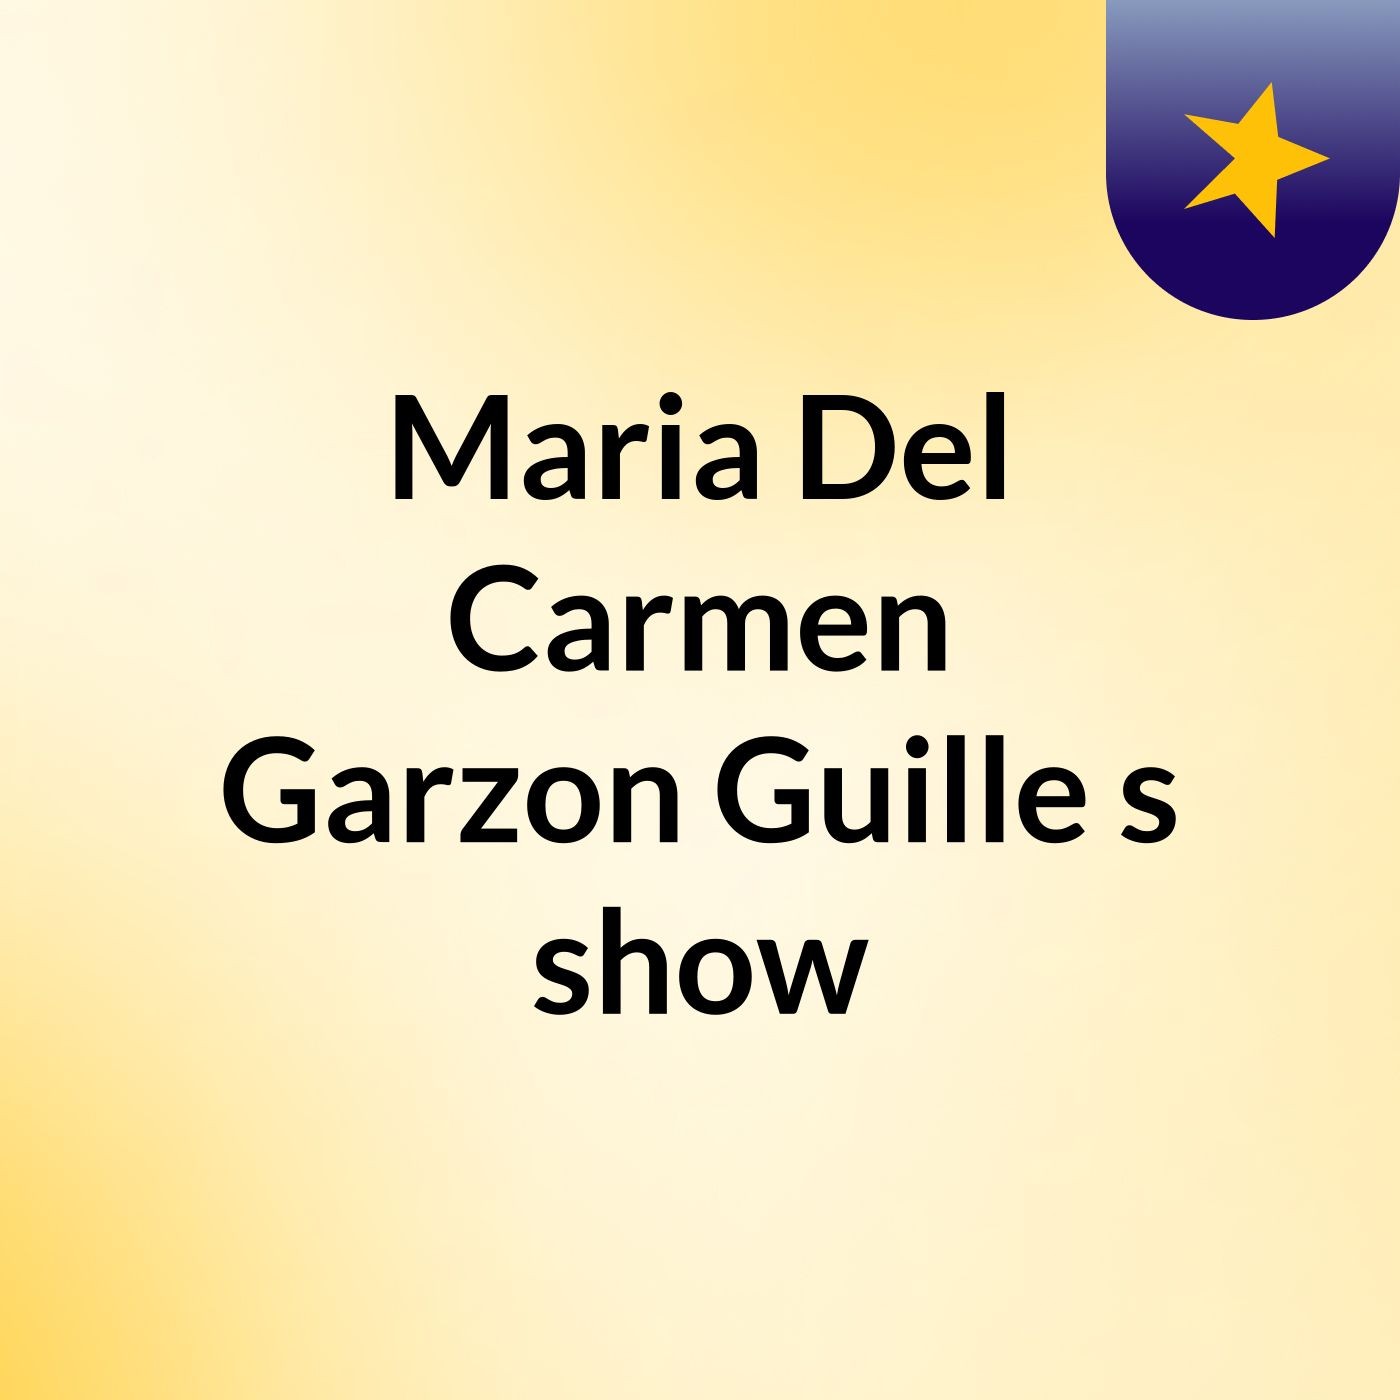 Maria Del Carmen Garzon Guille's show